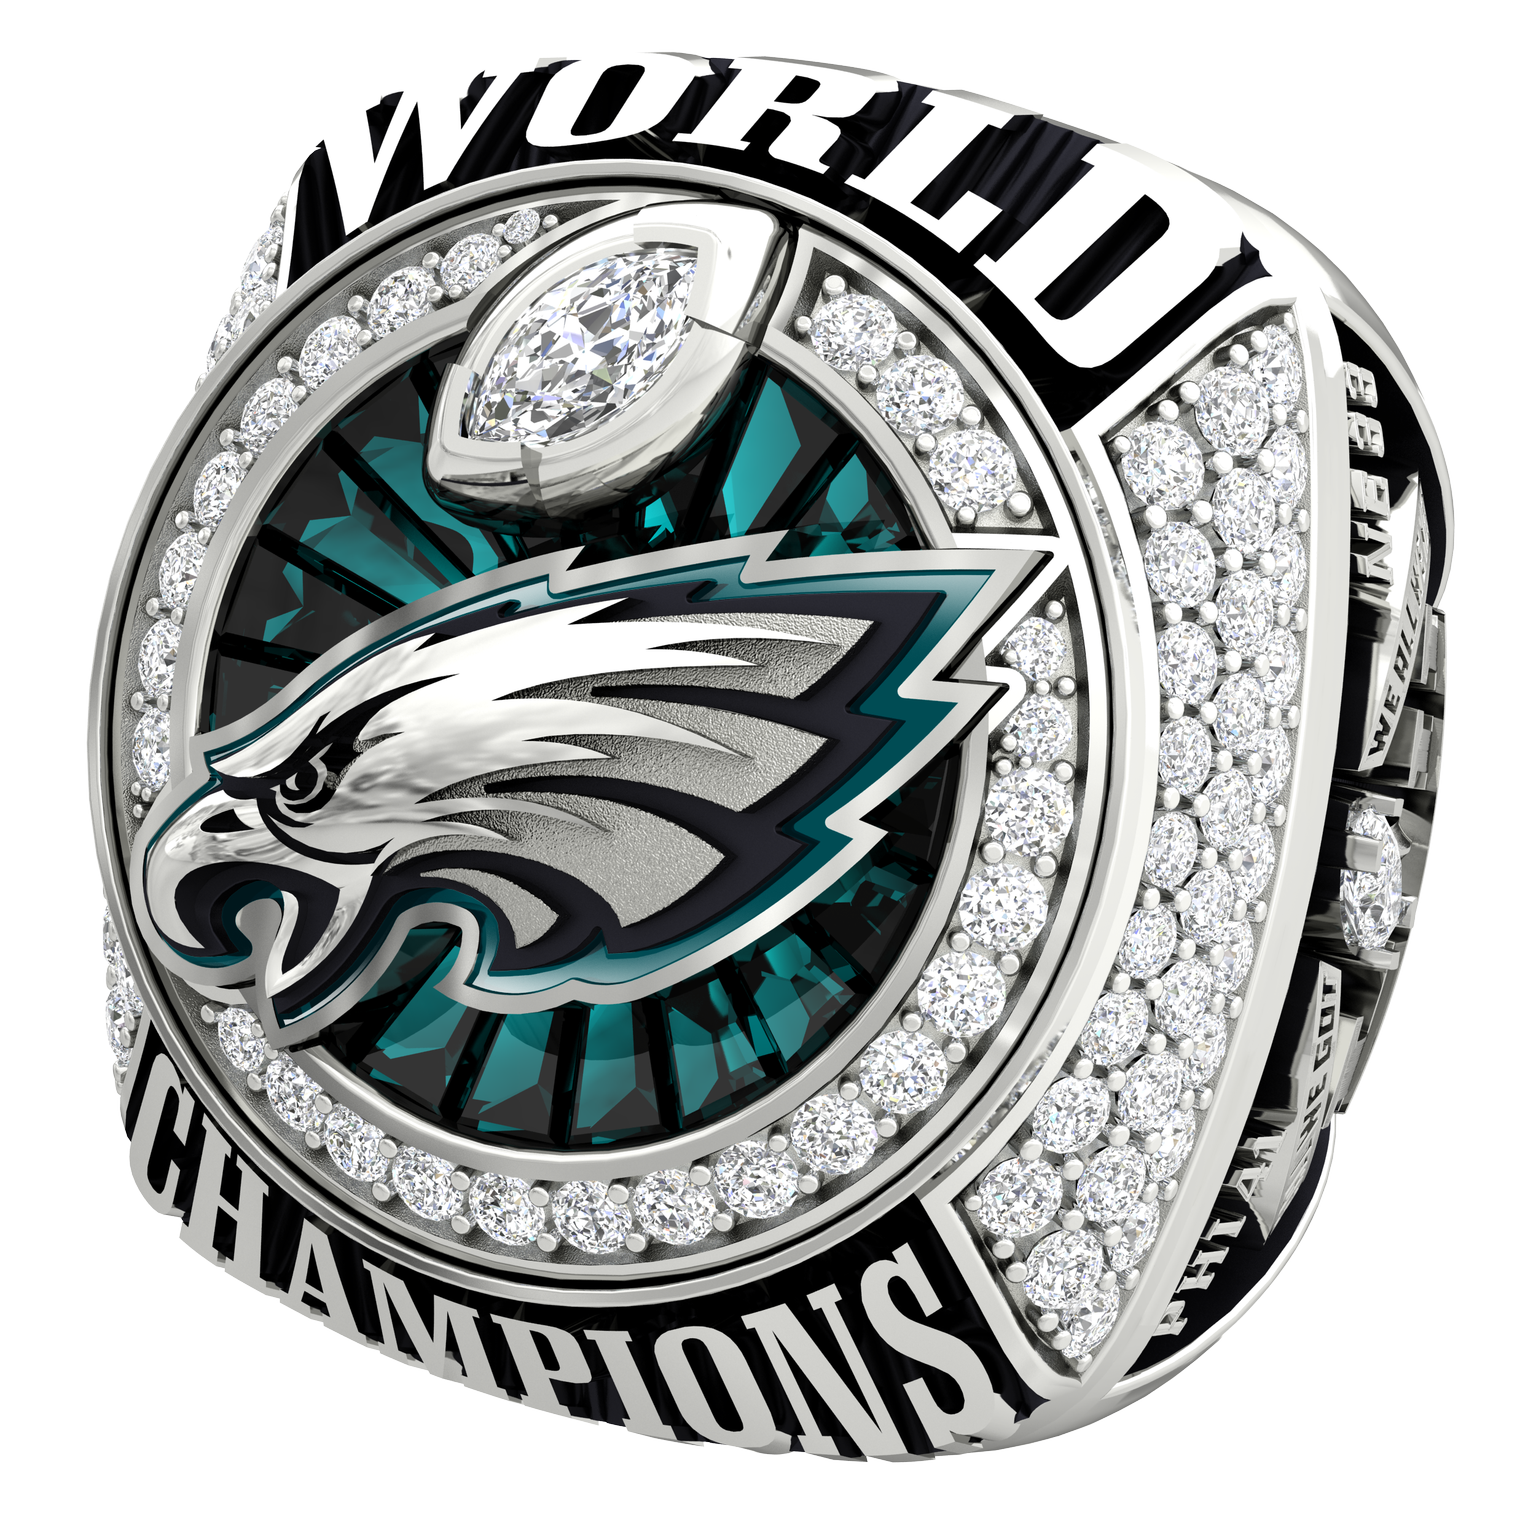 Jewelry Company Selling Eagles Super Bowl Replica Rings 